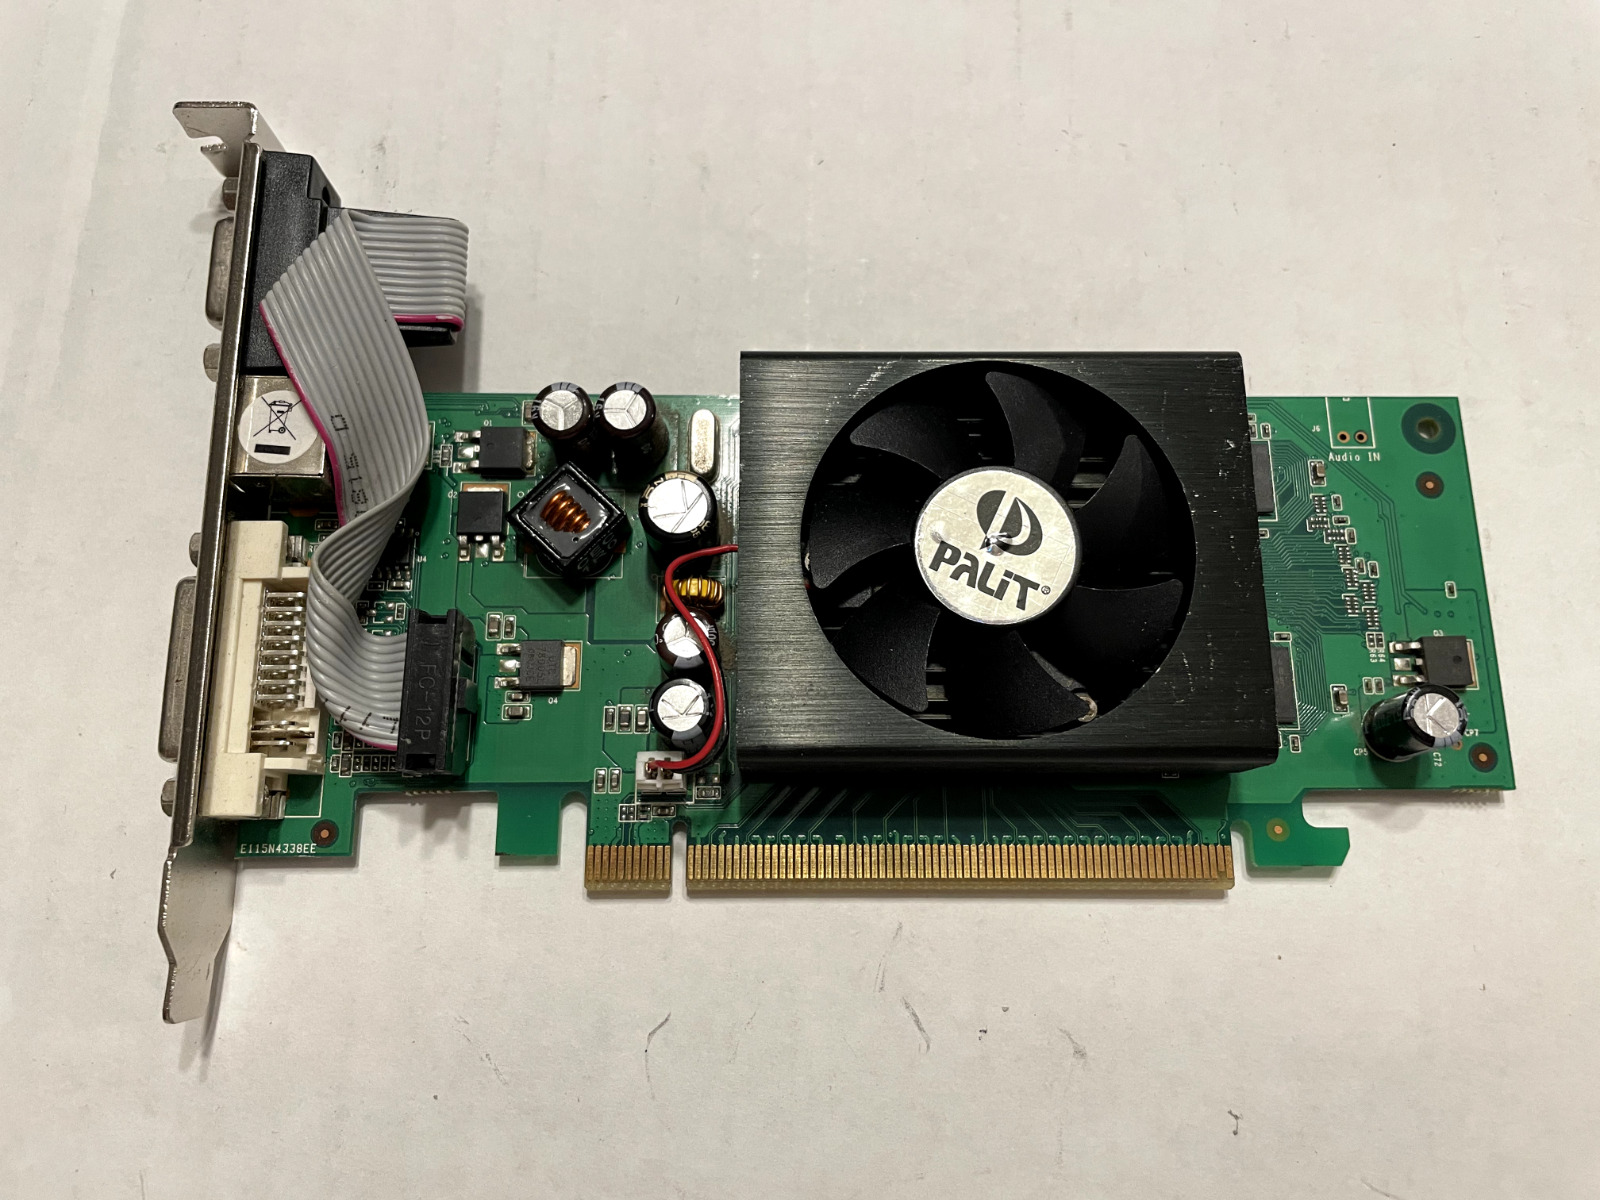 Palit Nvidia GeForce 7200GS 256MB DDR2 PCIE X16 DVI VGA Graphics Card GPU WORKS